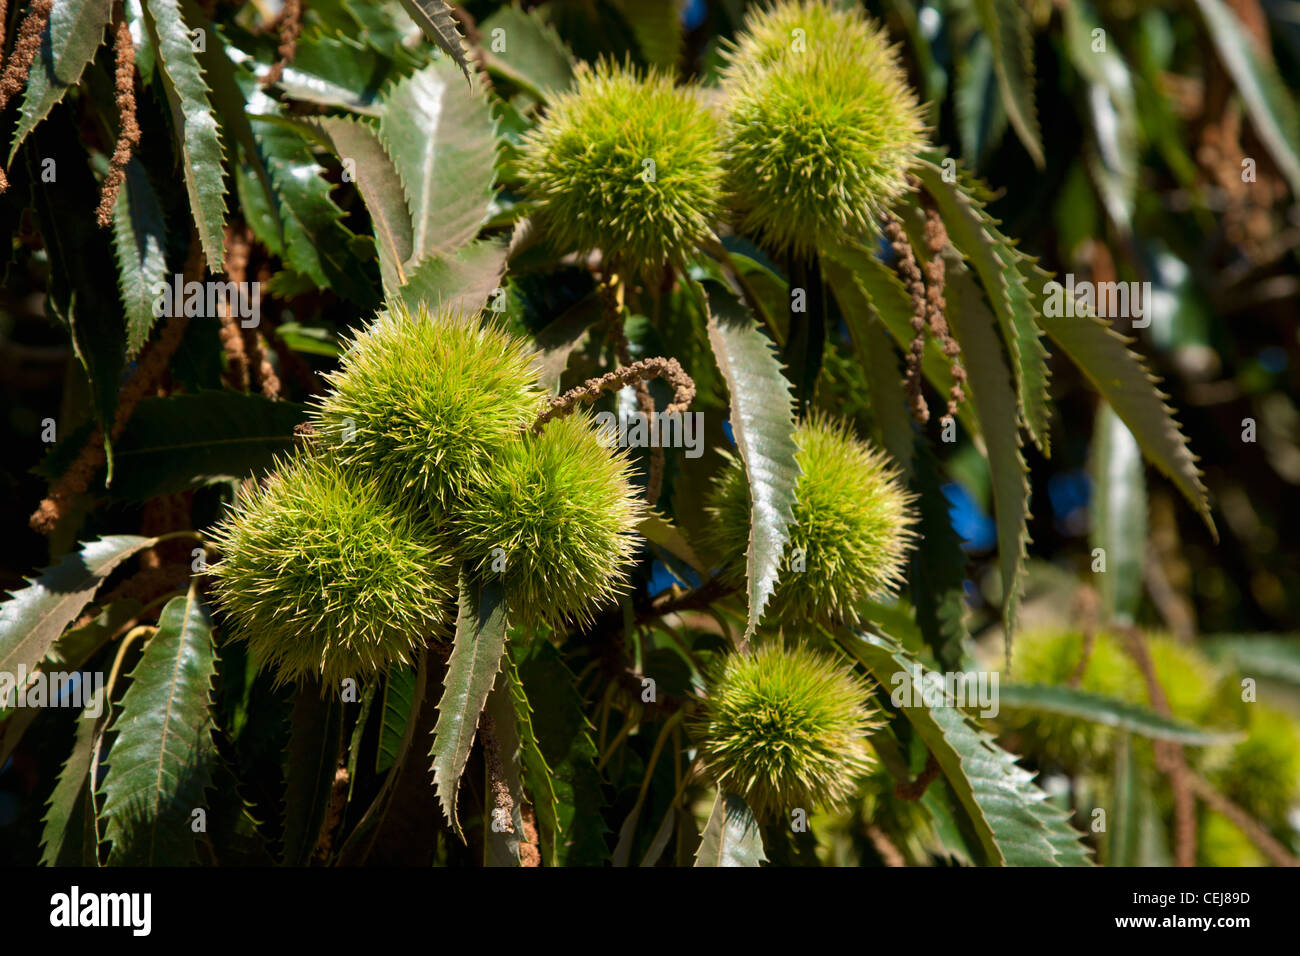 Agriculture - Mid-season chestnuts on the tree / near Linden, San Joaquin County, California, USA. Stock Photo